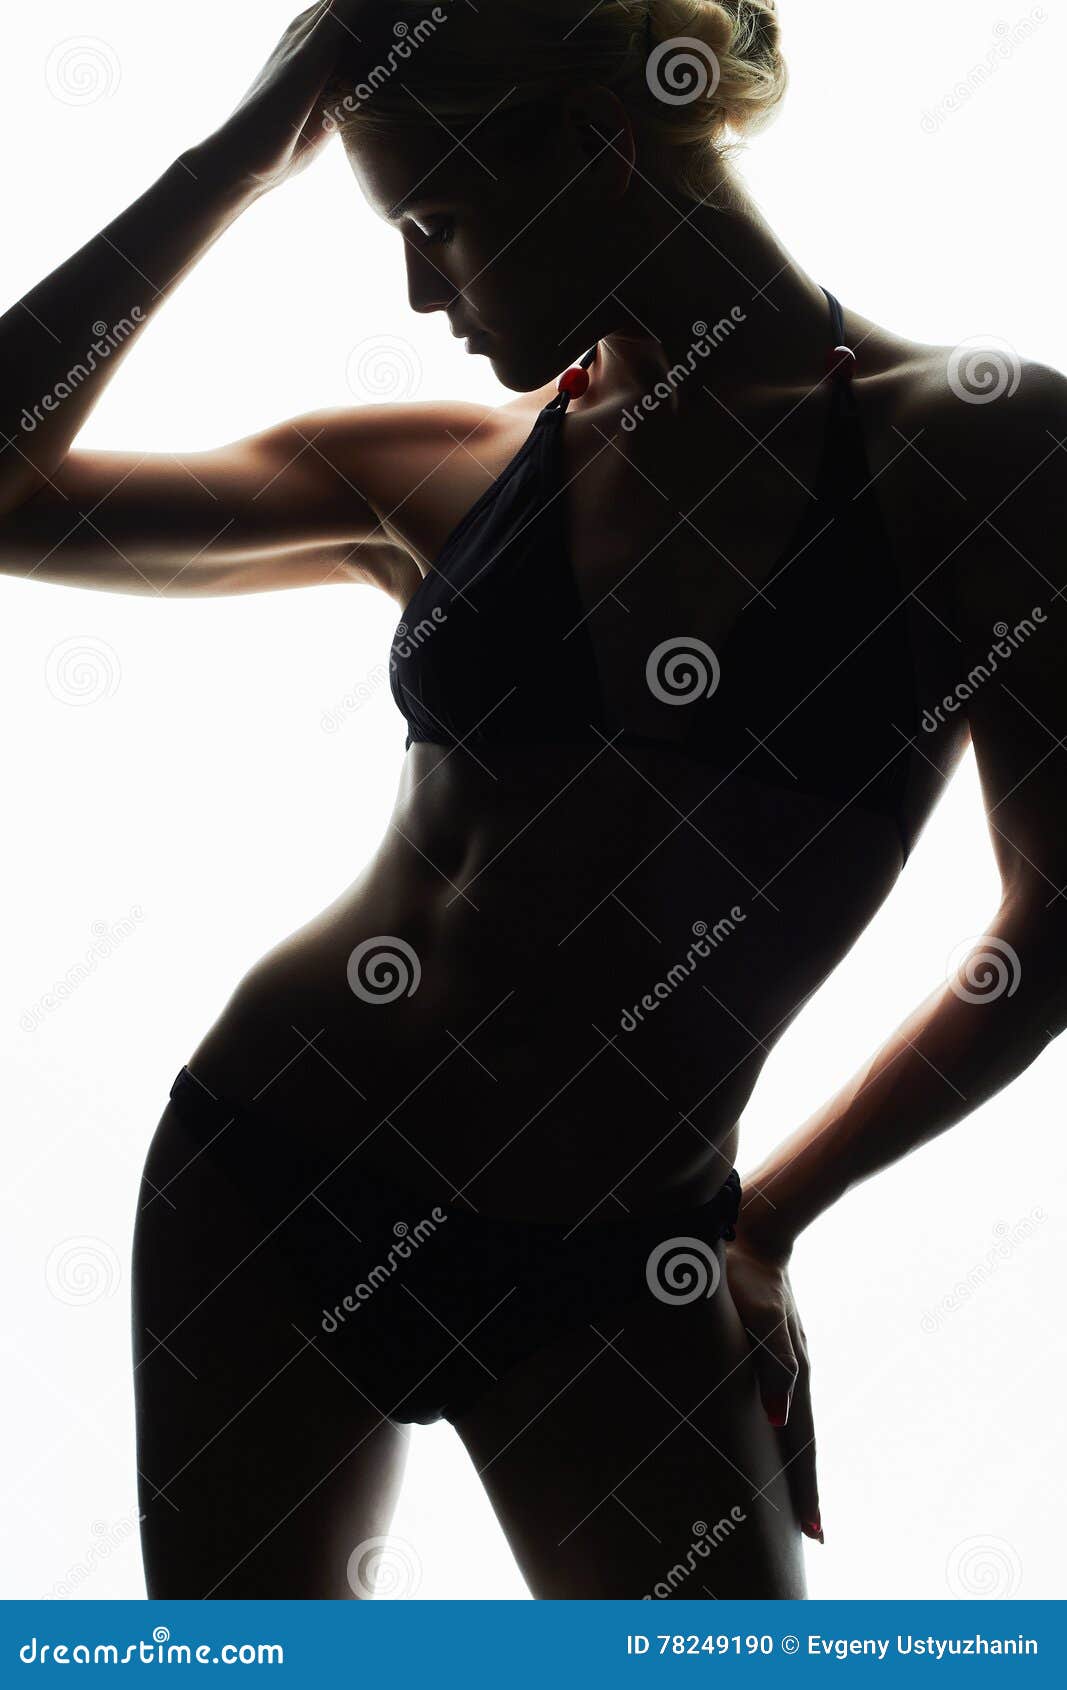 Female sports body silhouette.young woman in bikini.fitness girl